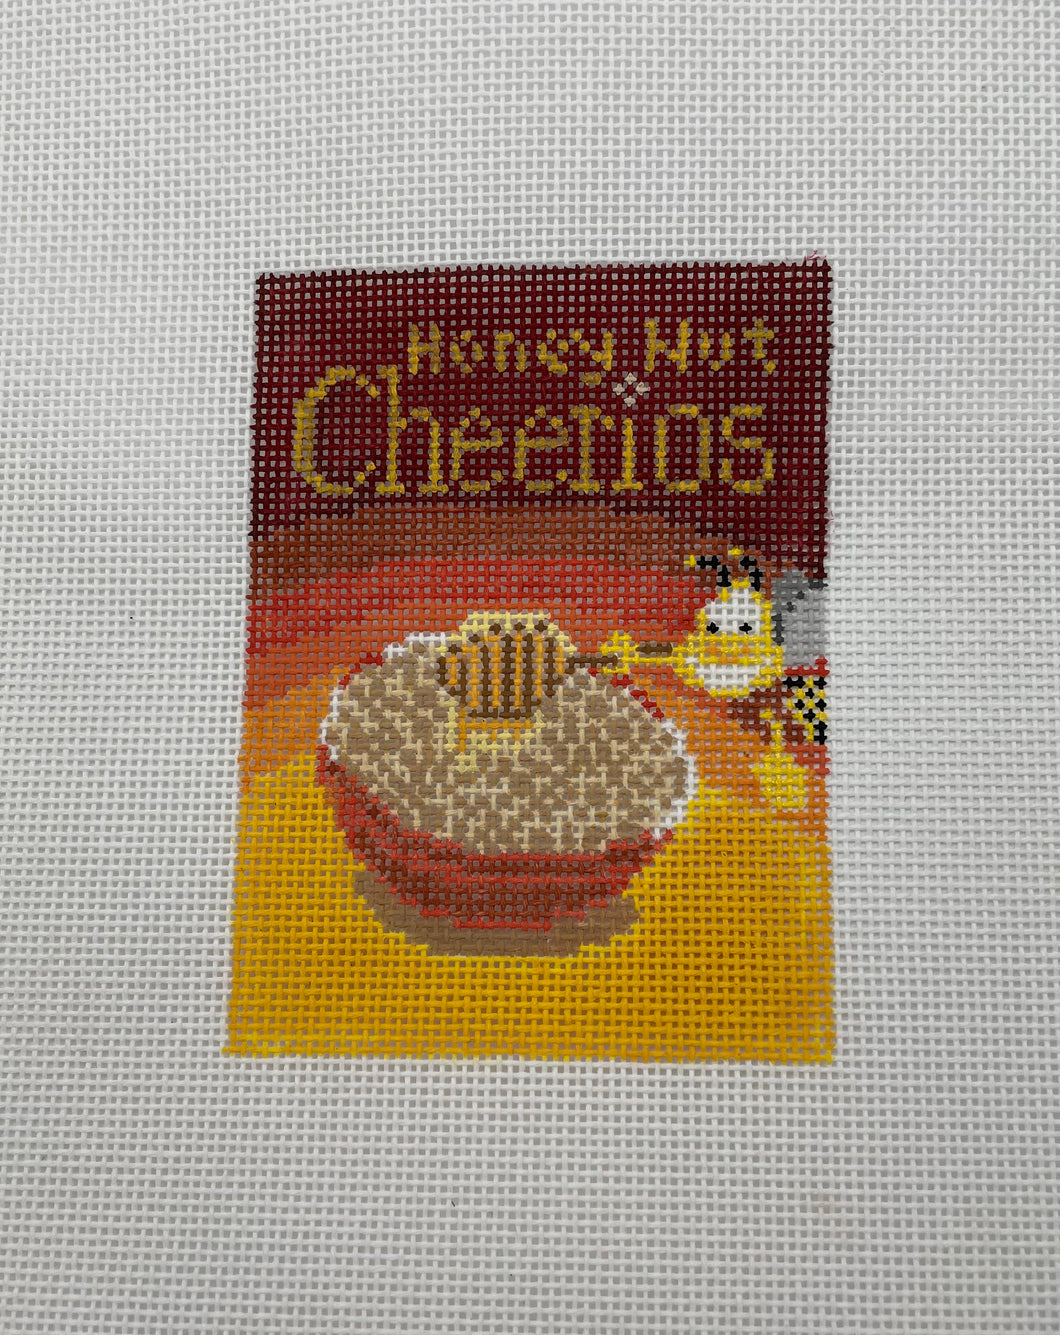 Honey Nut Cheerios Needlepoint Ornament